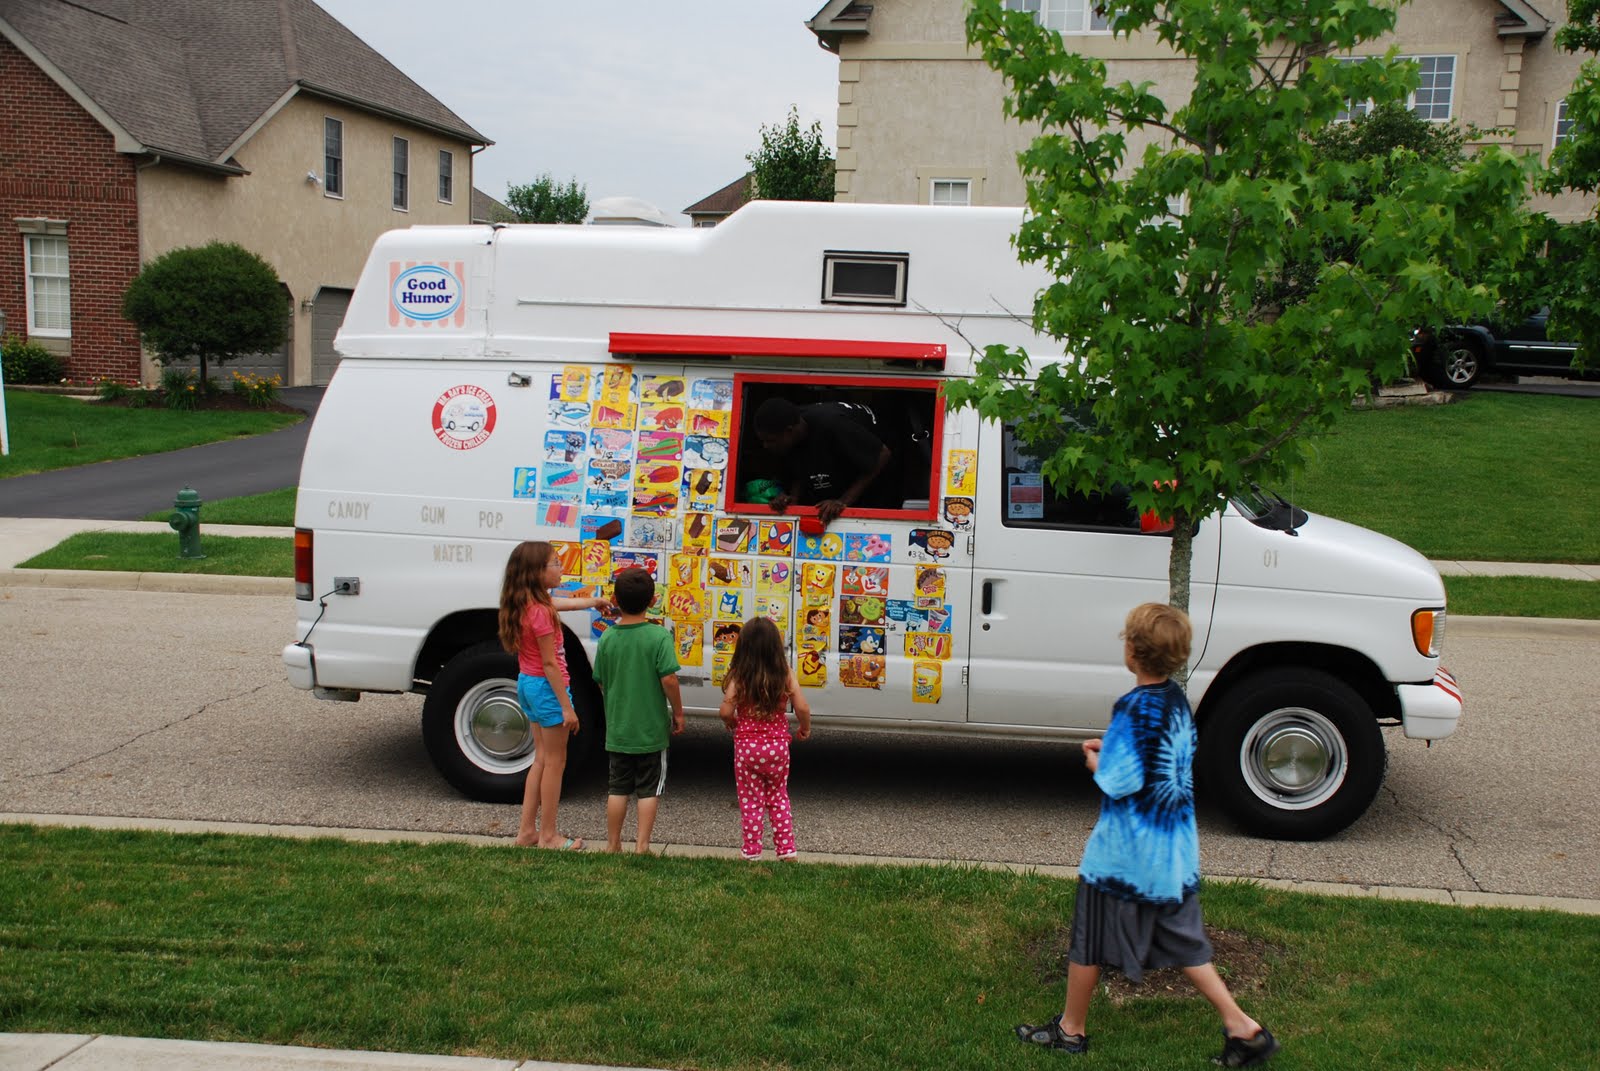 ice cream van in my area